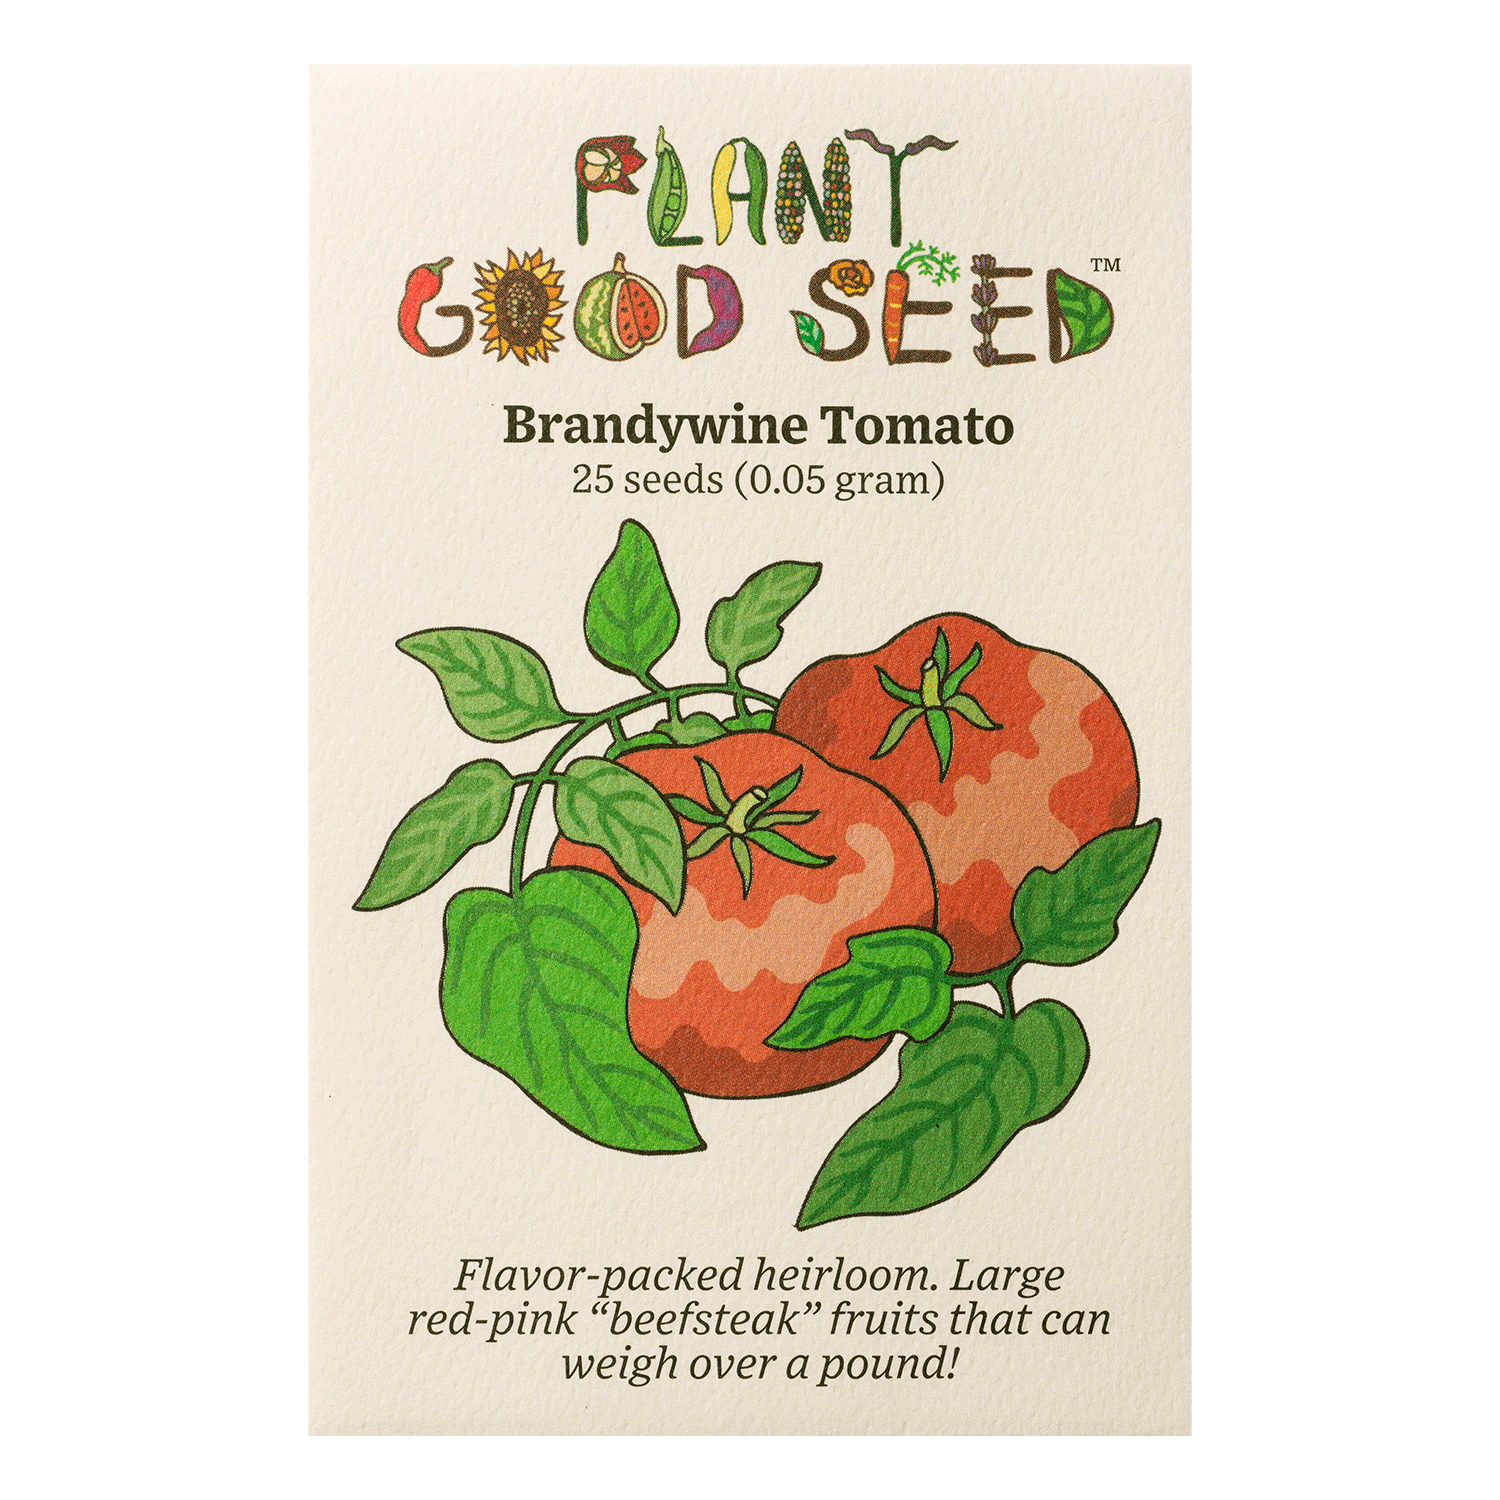 Brandywine Tomato Seeds - The Plant Good Seed Company